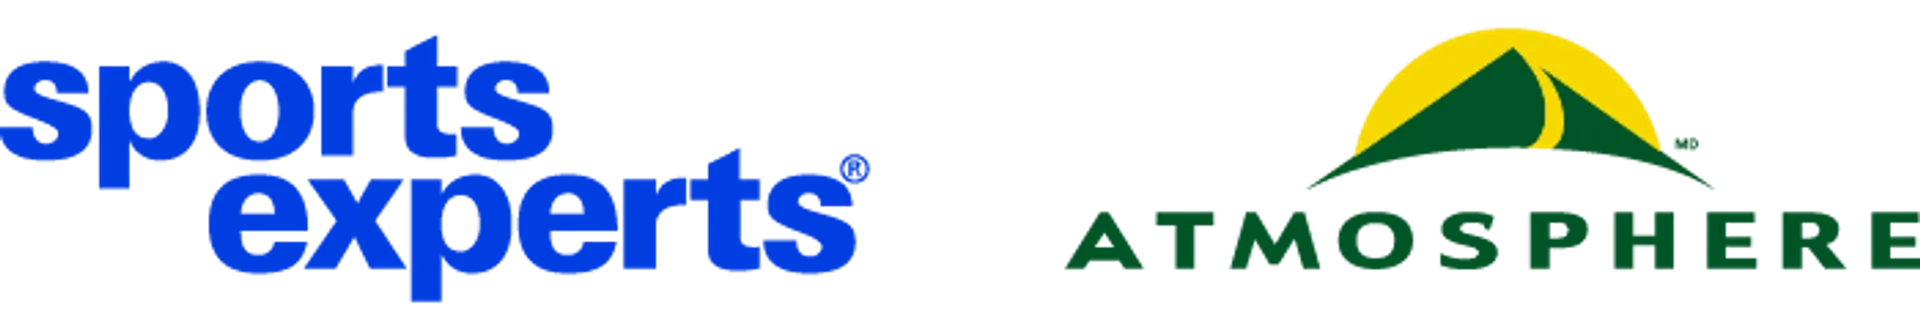 SPORTS EXPERTS logo de circulaire